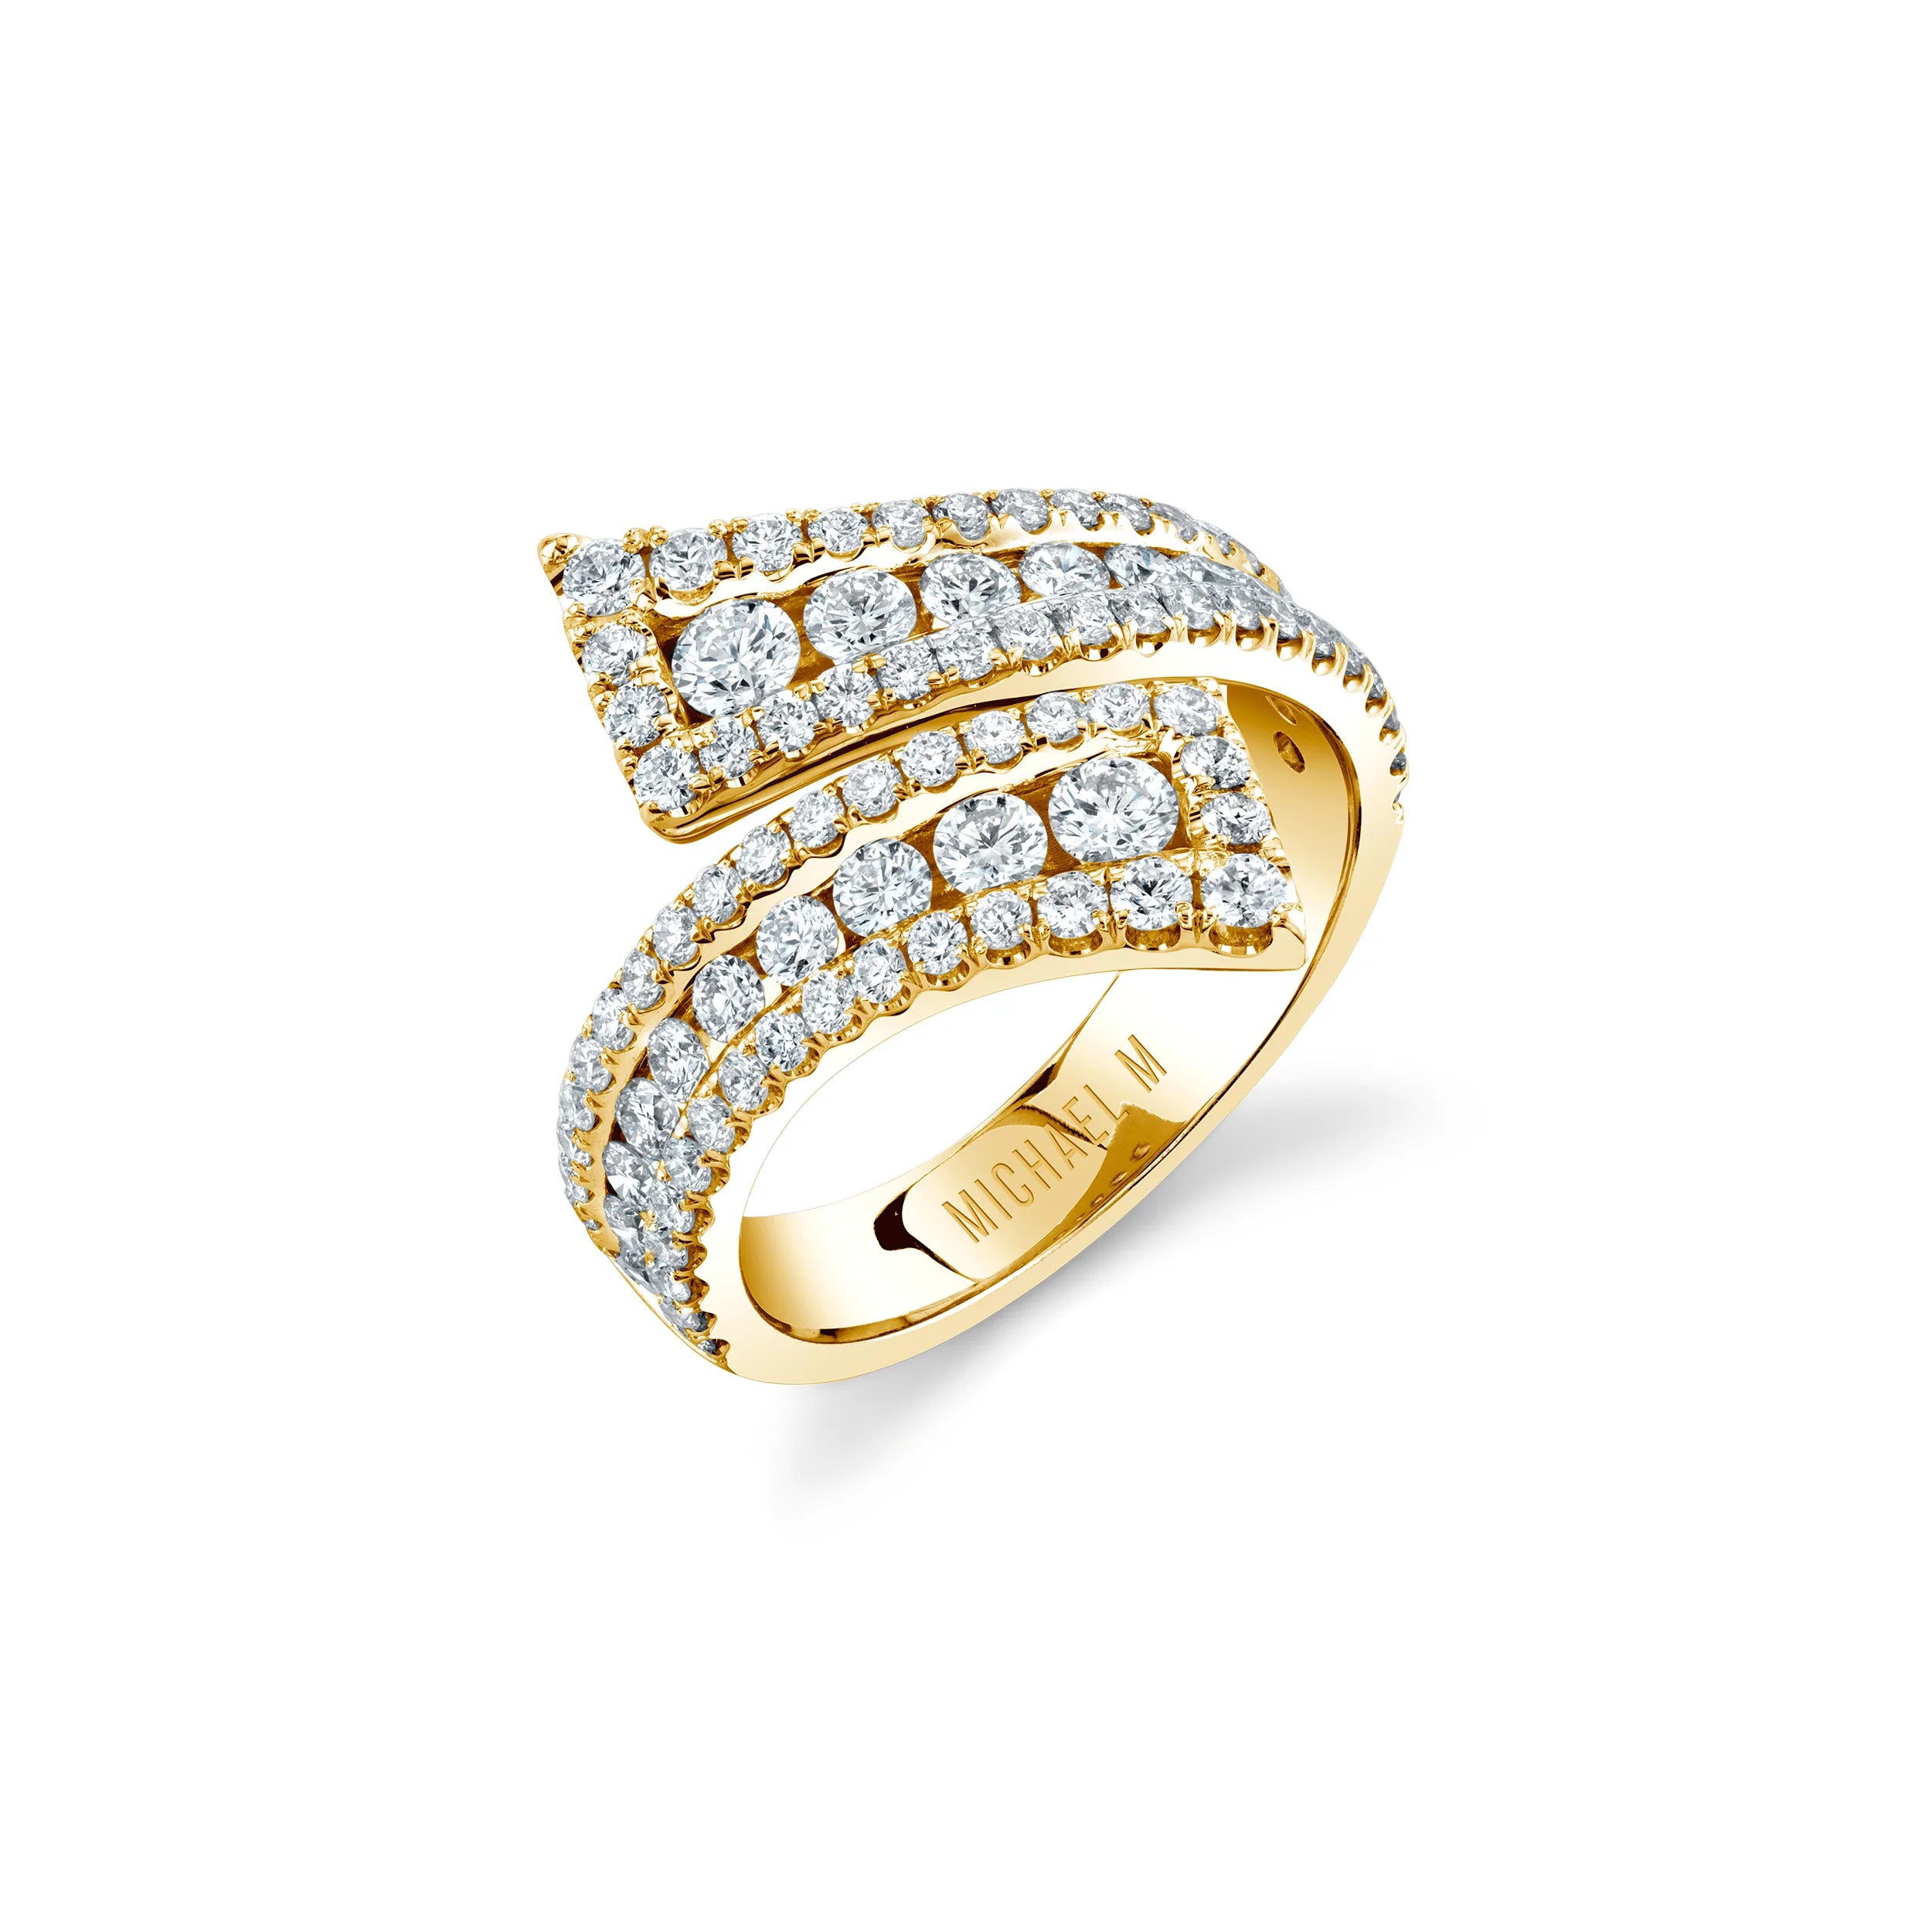 MICHAEL M Fashion Rings 14K Yellow Gold / 4 Europa Bypass Ring F402